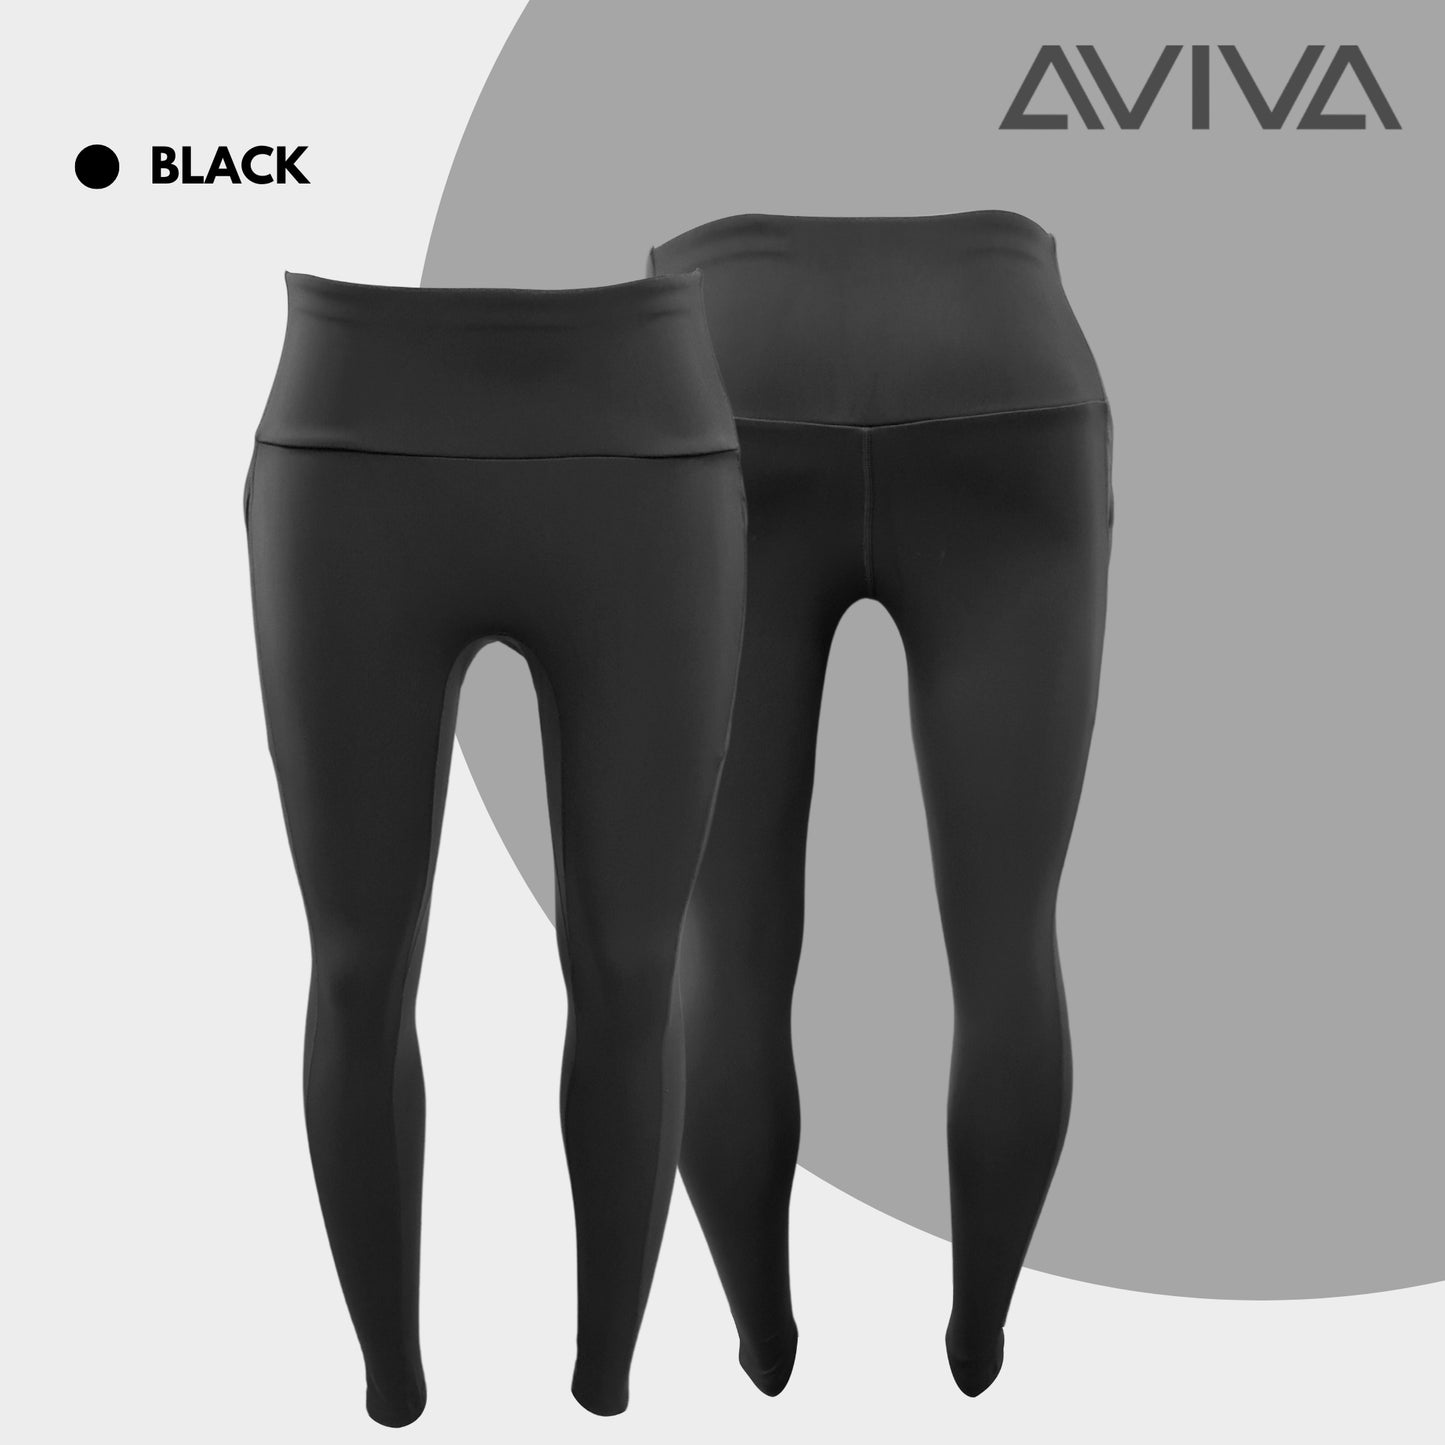 AVIVA Active Sportwear Long Leggings with Pockets (80-4191)